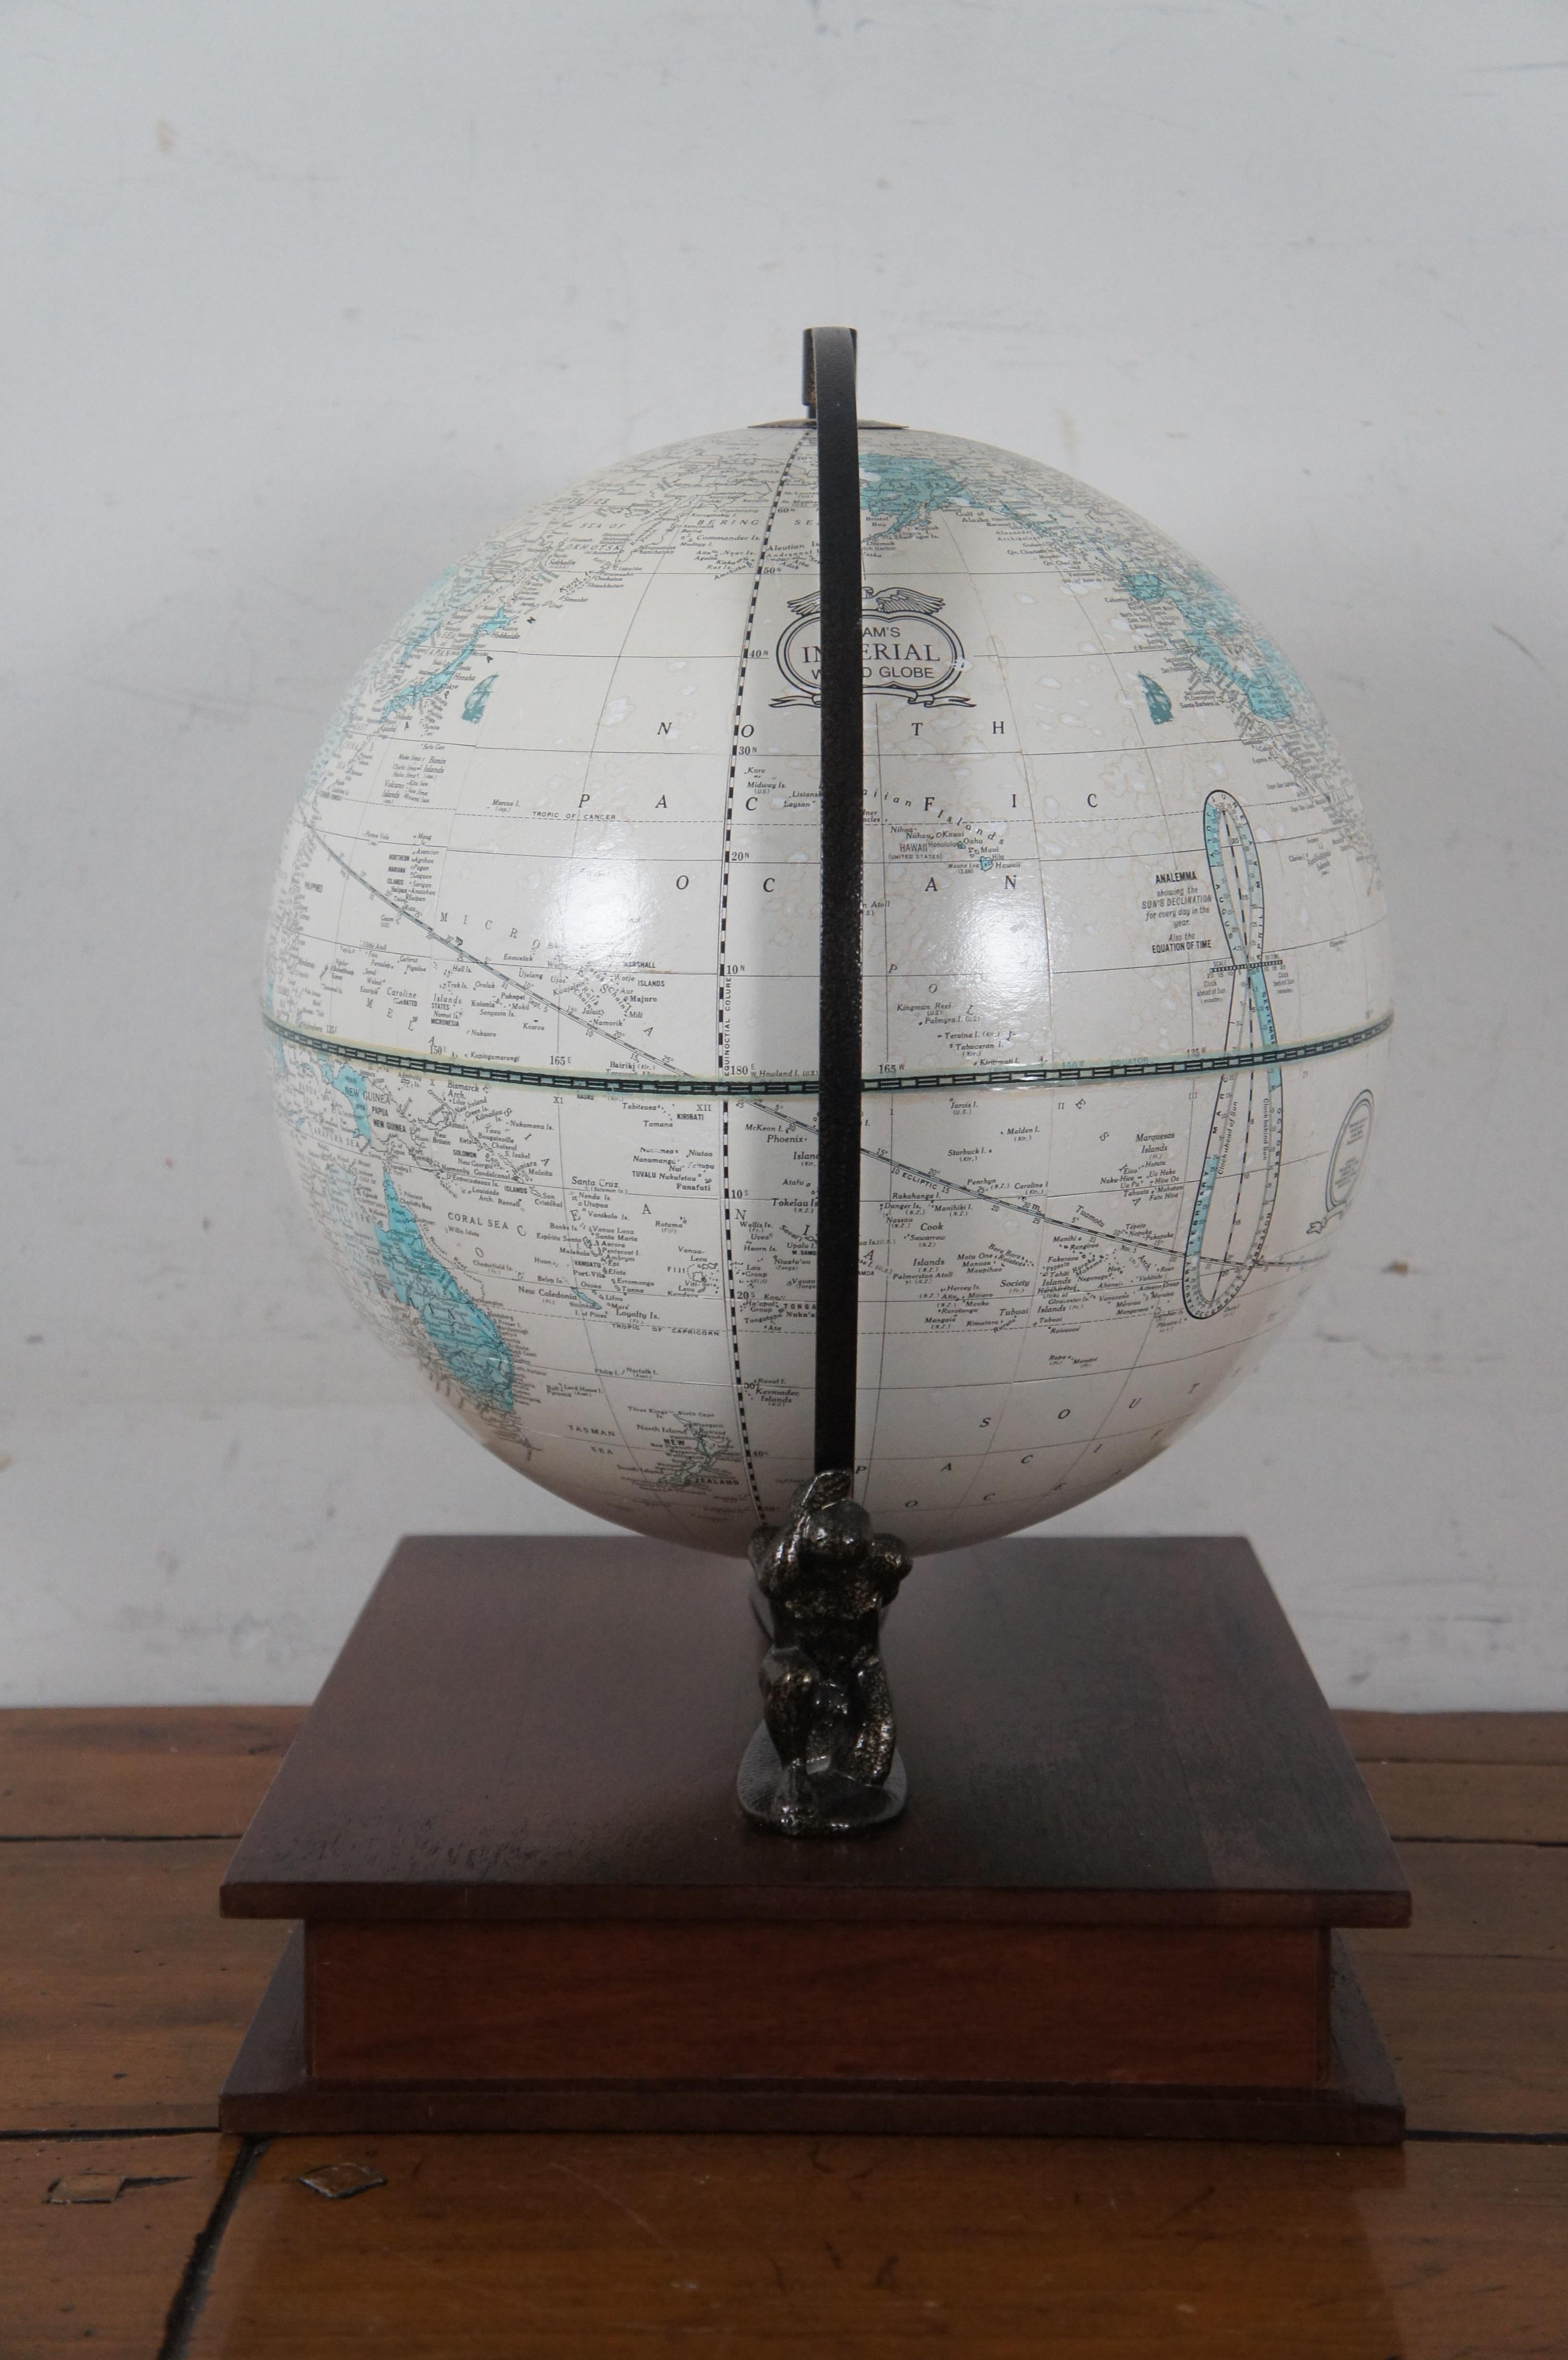 cram's imperial world globe